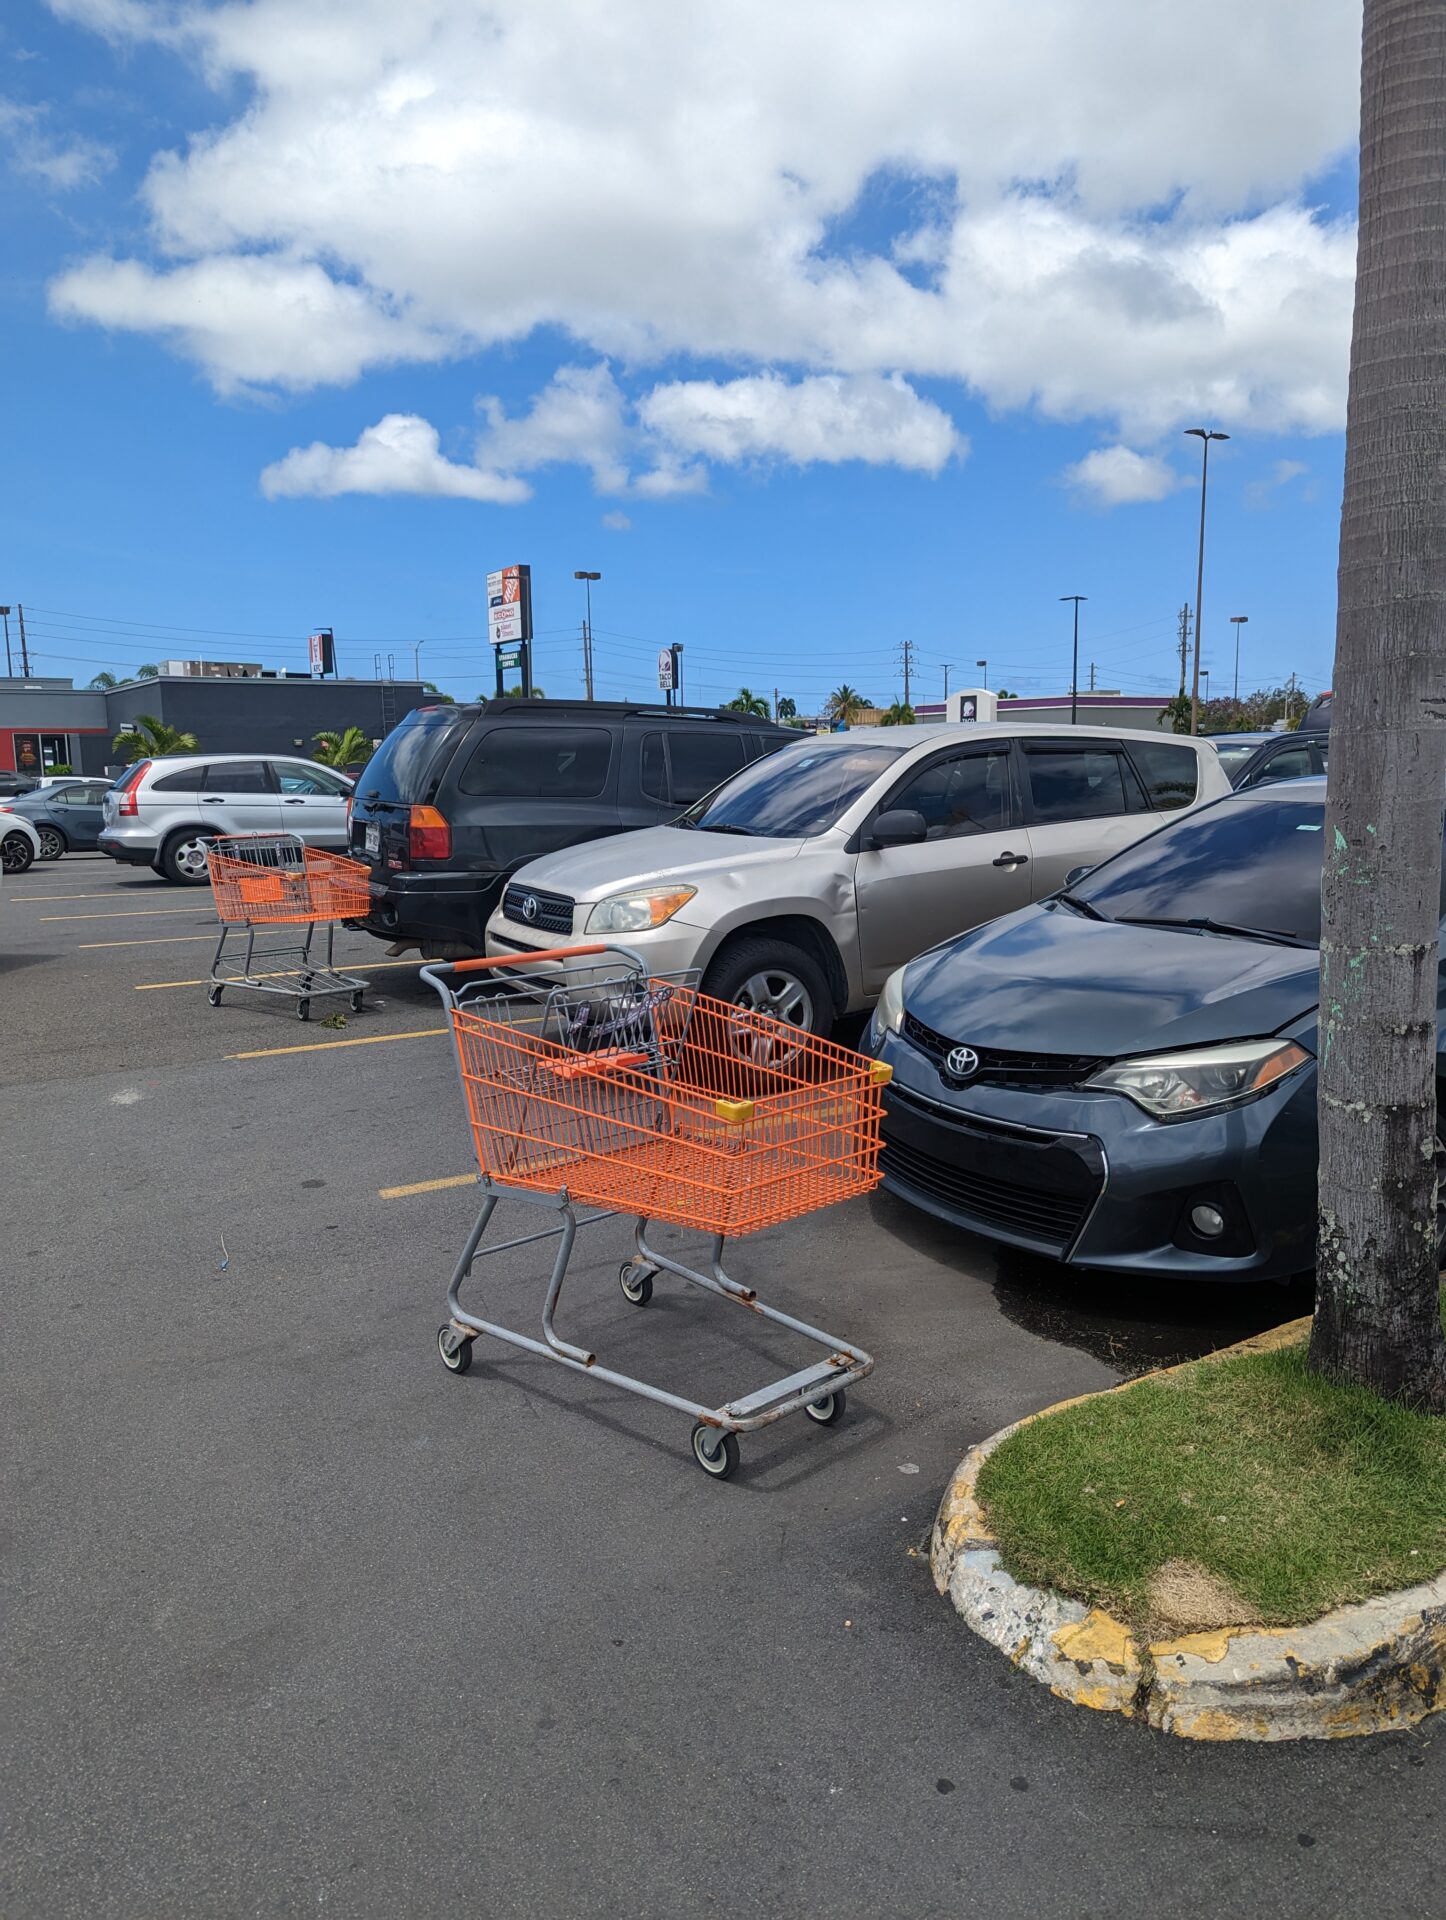 a shopping cart in a parking lot